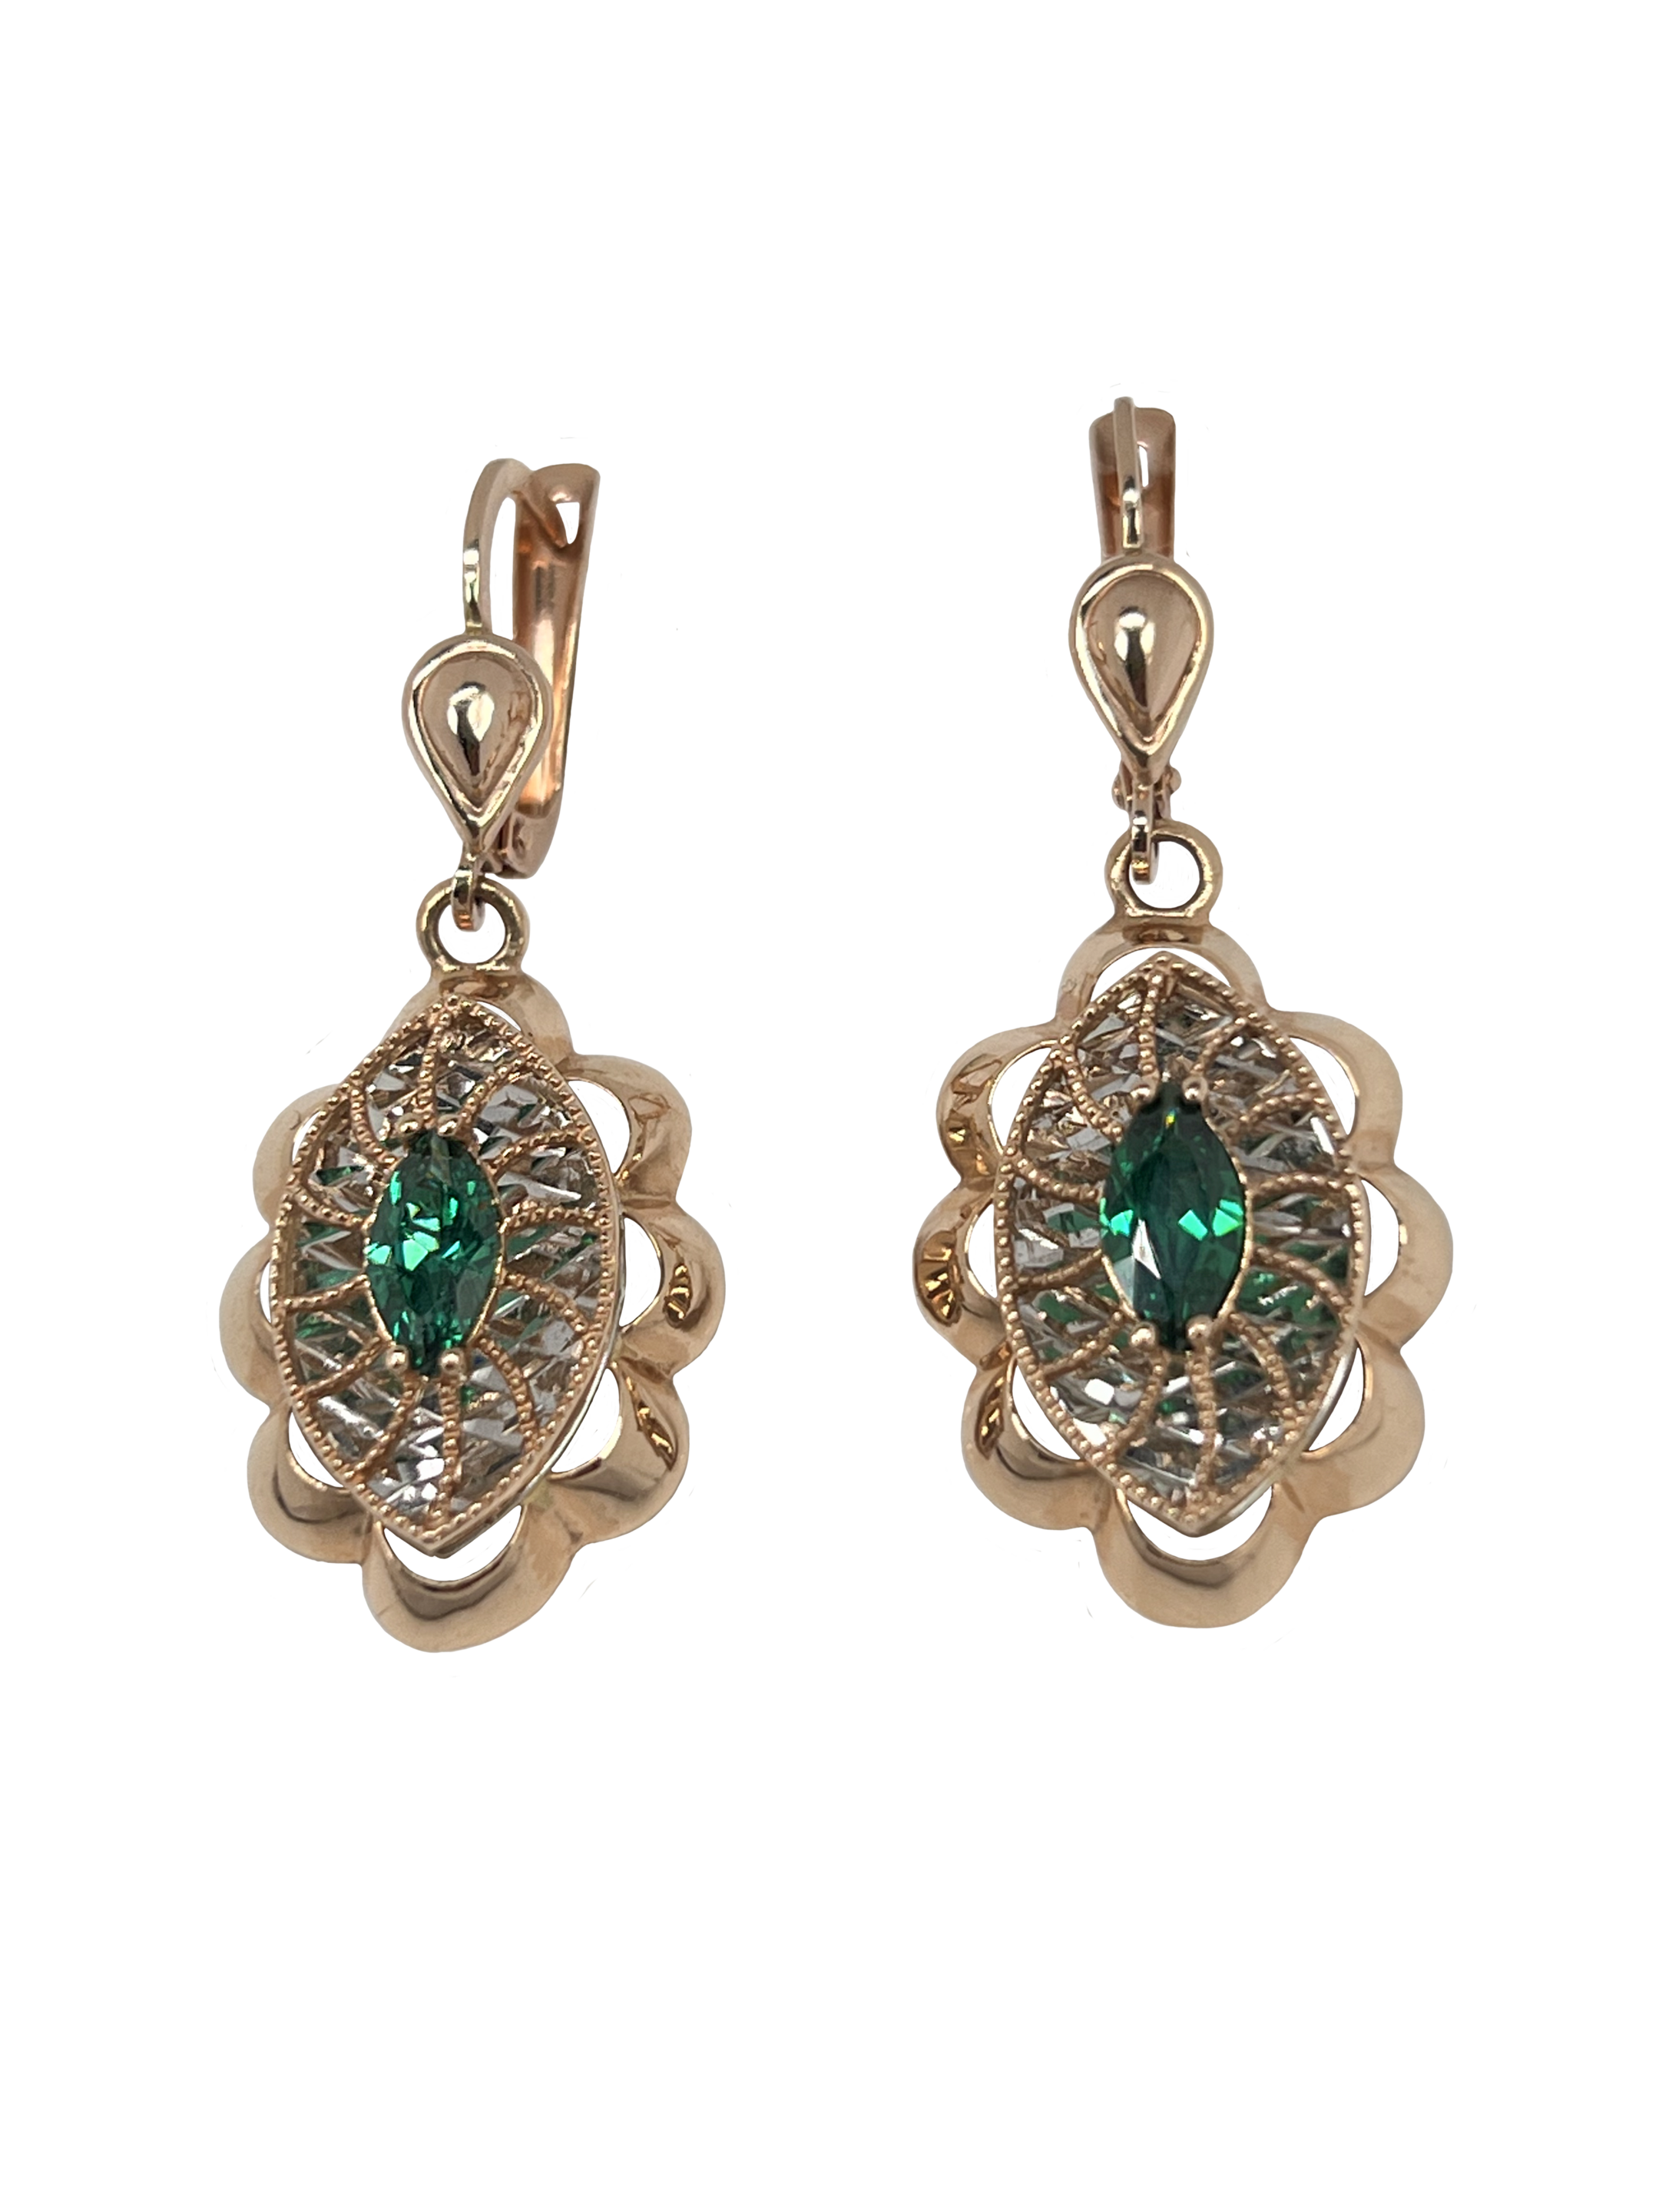 Goldene Ohrringe aus Roségold mit grünen Zirkonen